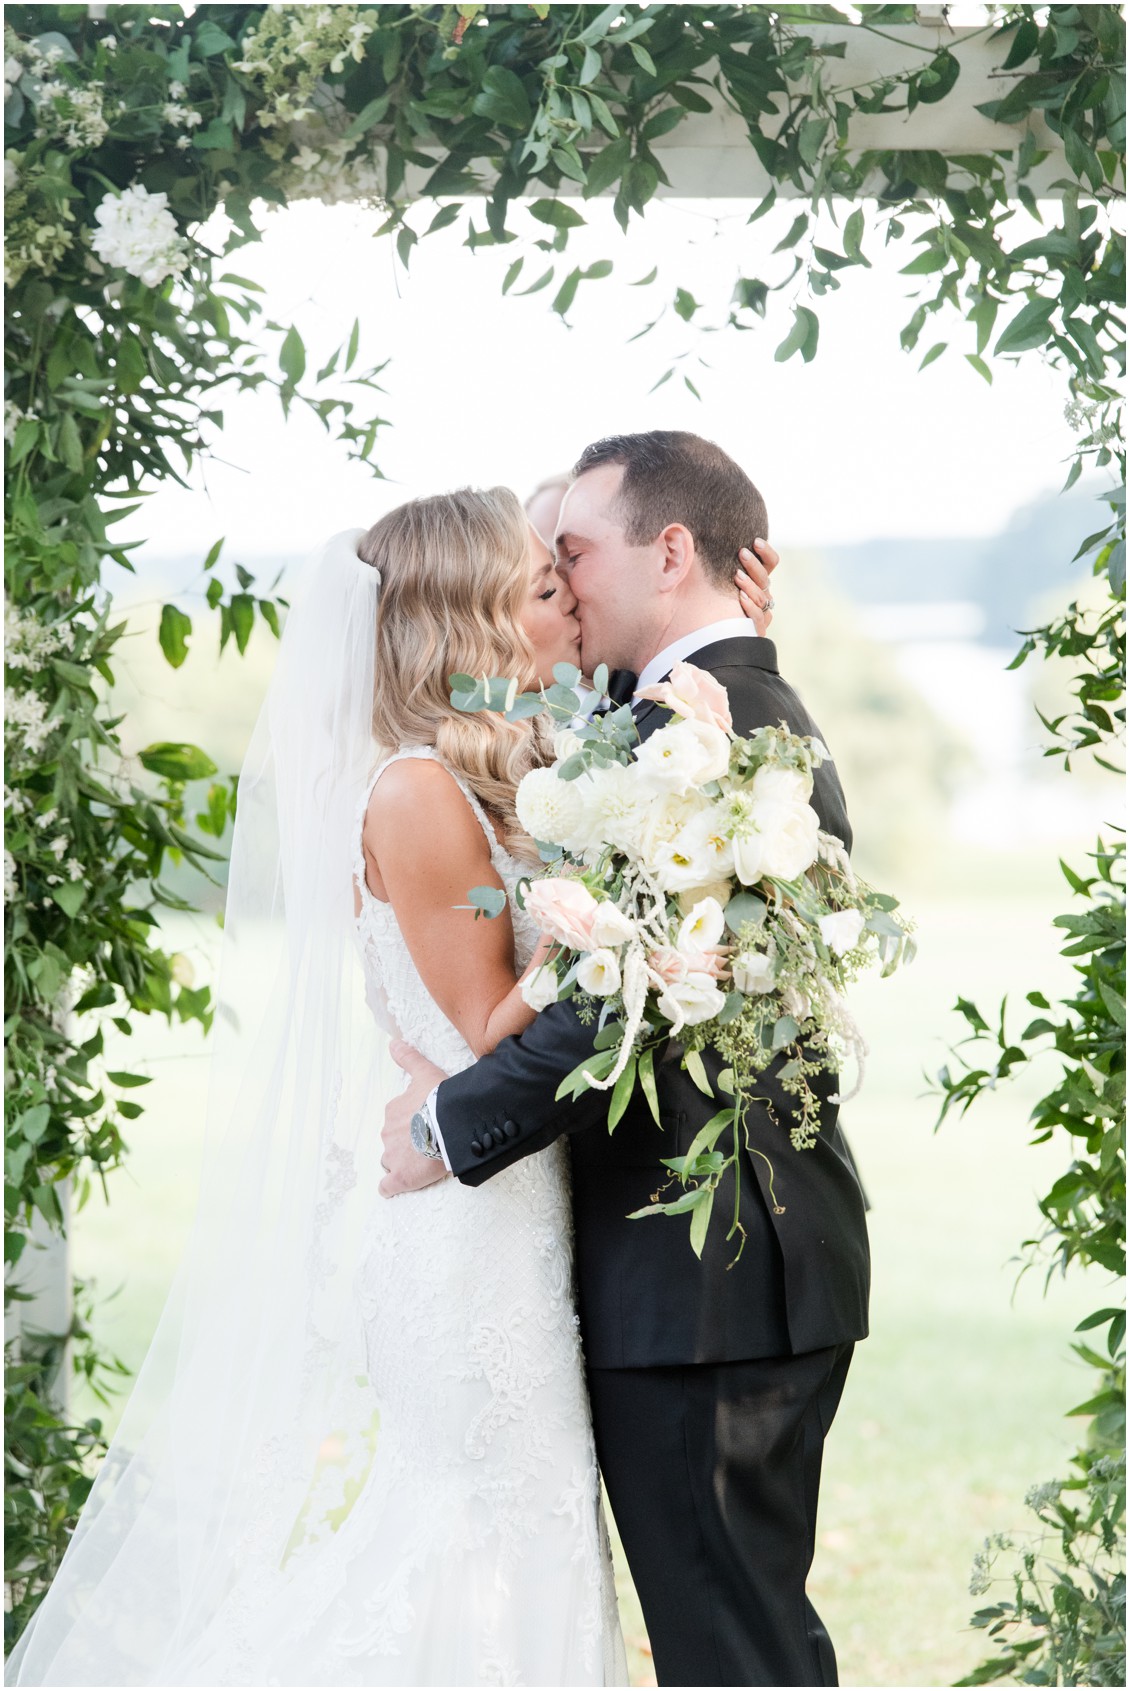 Bride and groom first kiss | Brittland Manor | Rob Korb | My Eastern Shore Wedding 